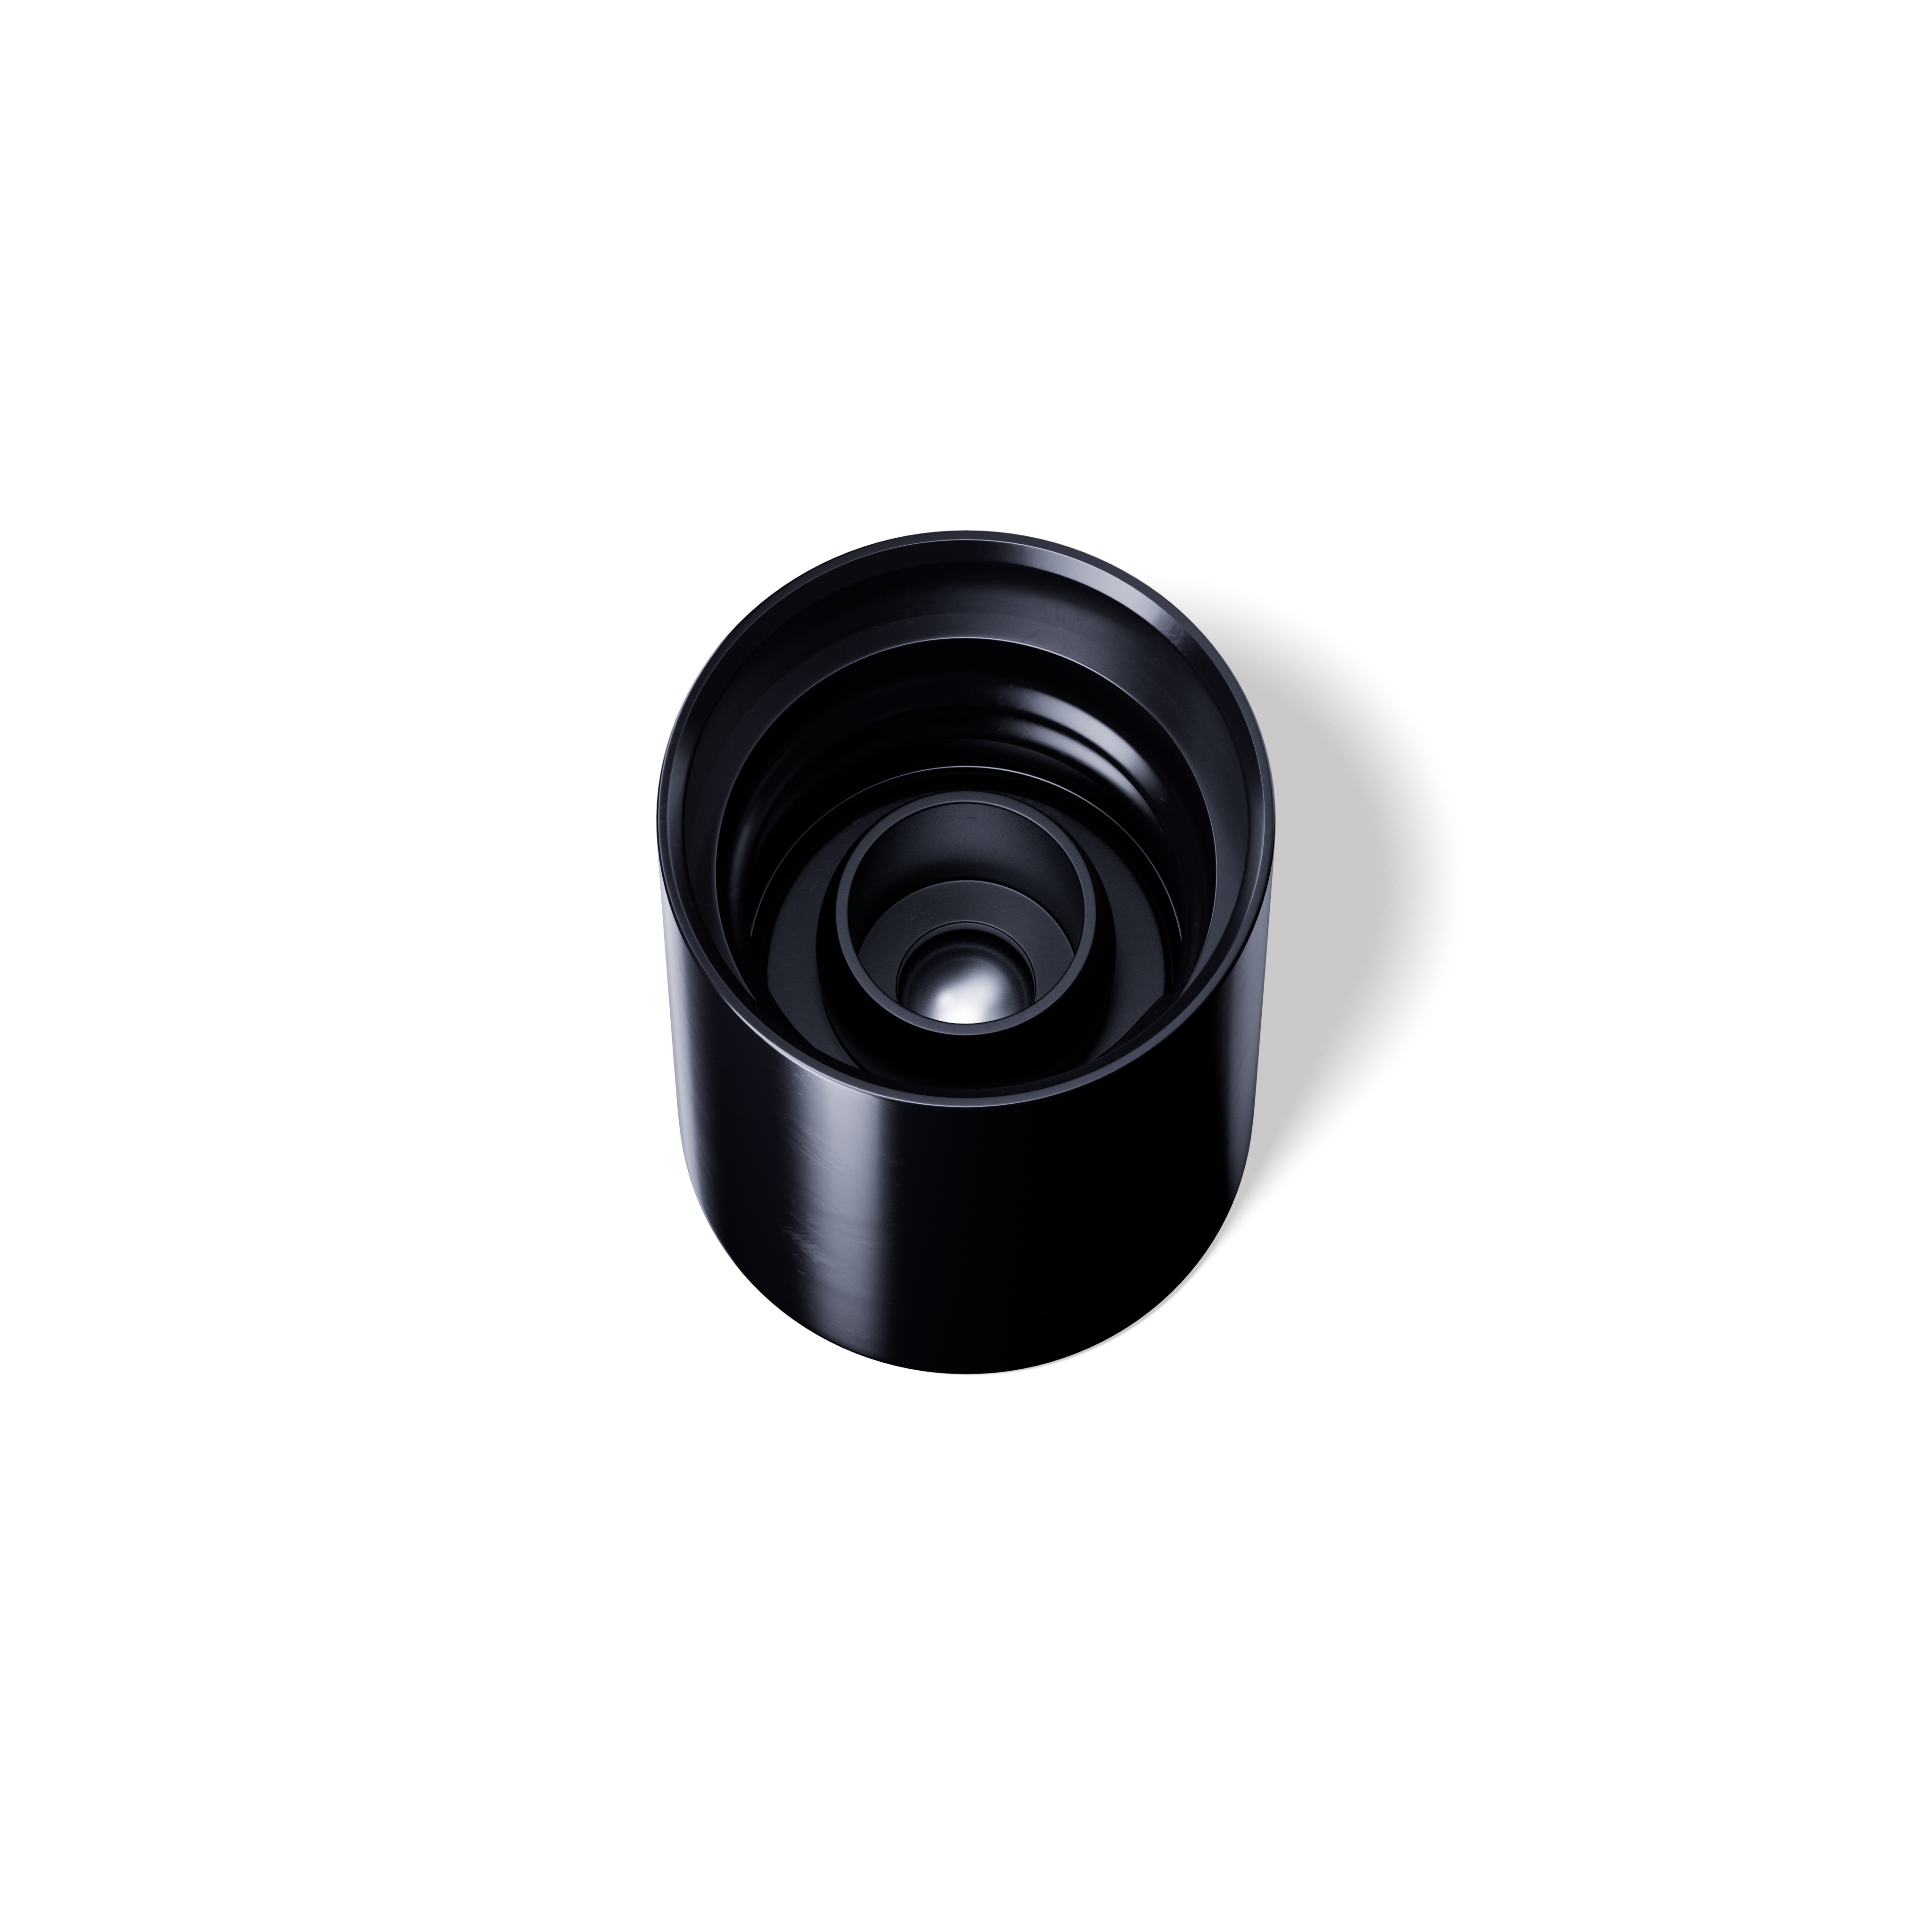 Roll-on cap DIN18, PP, black fitment, stainless steel ball, black cap (Orion)